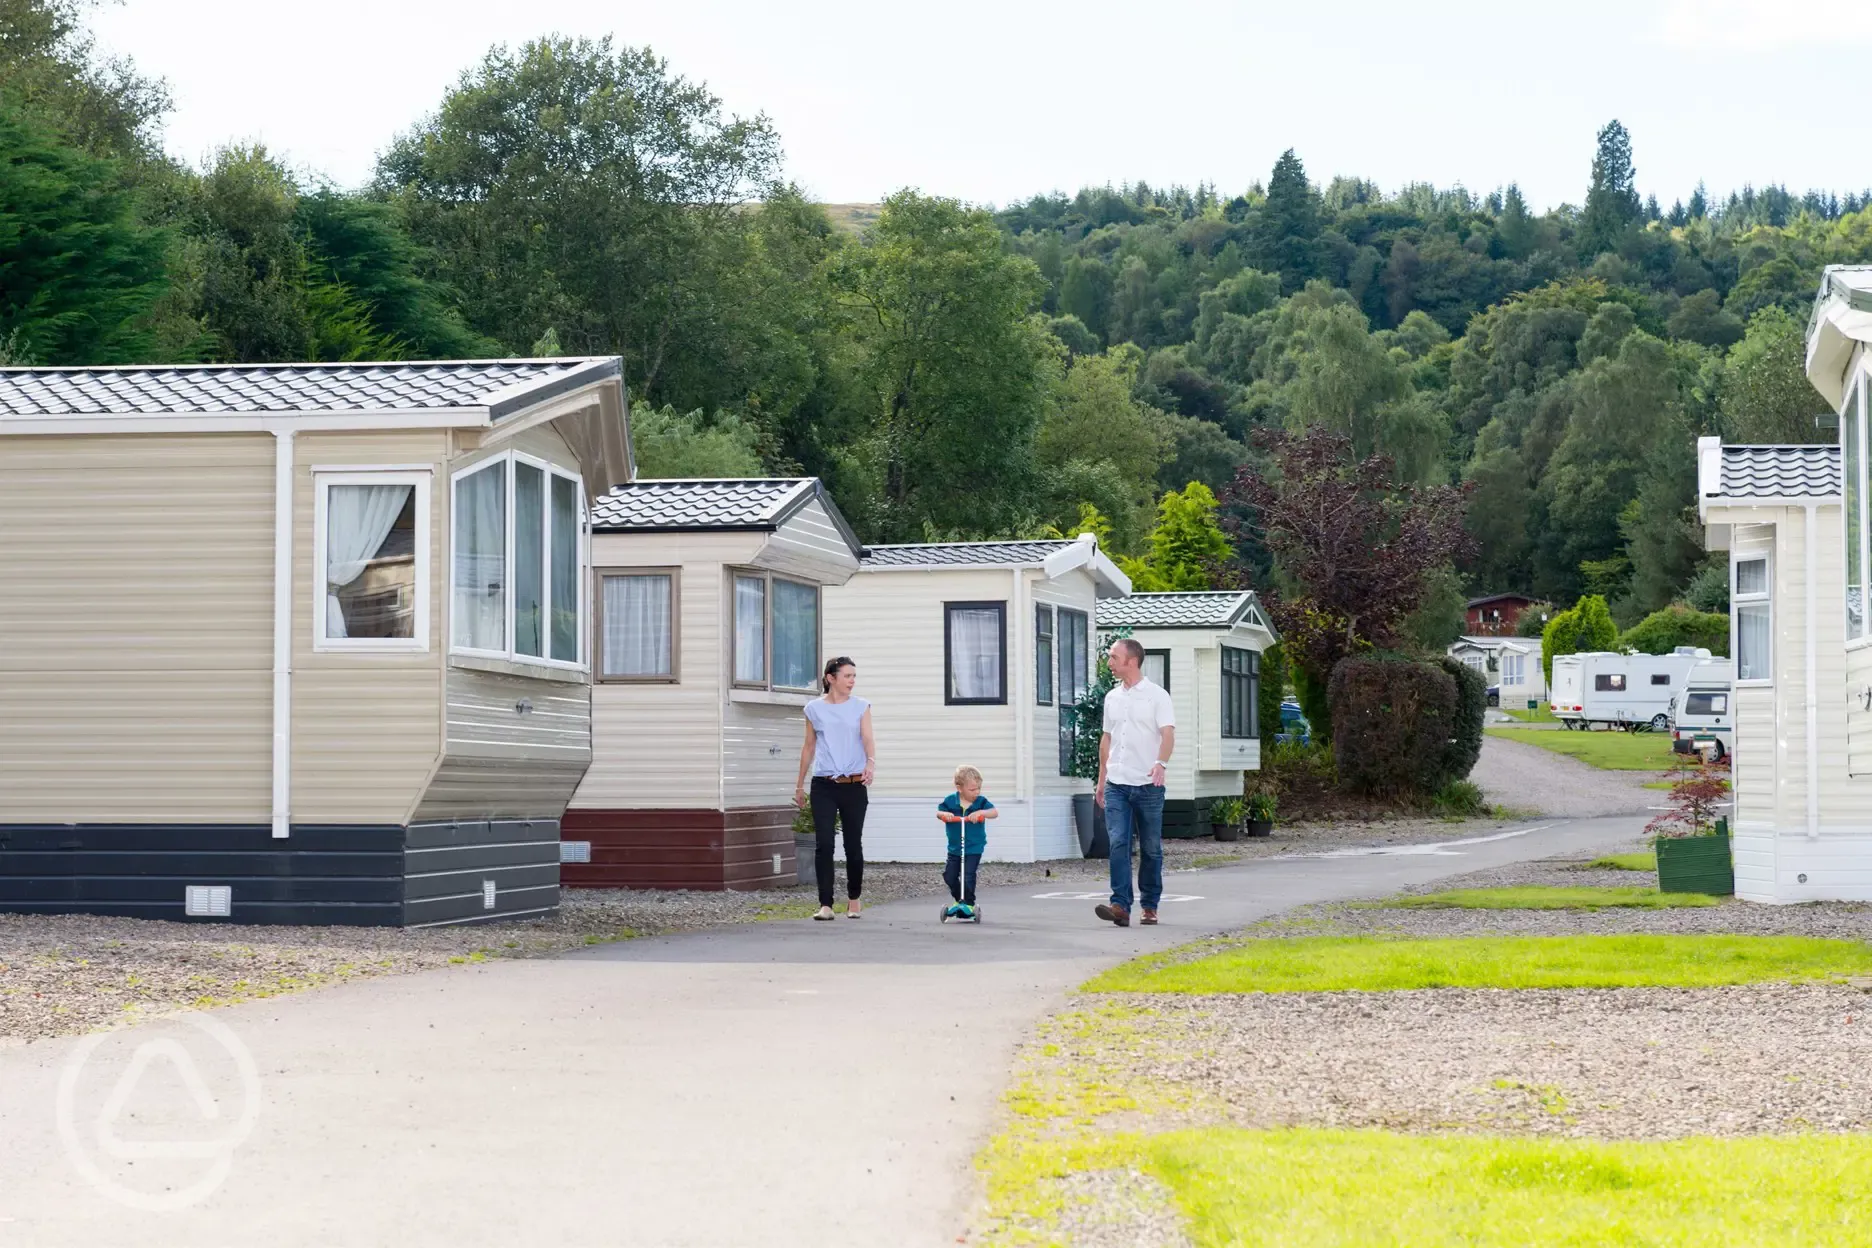 Caravan Holiday Homes at Lomond Woods, Balloch